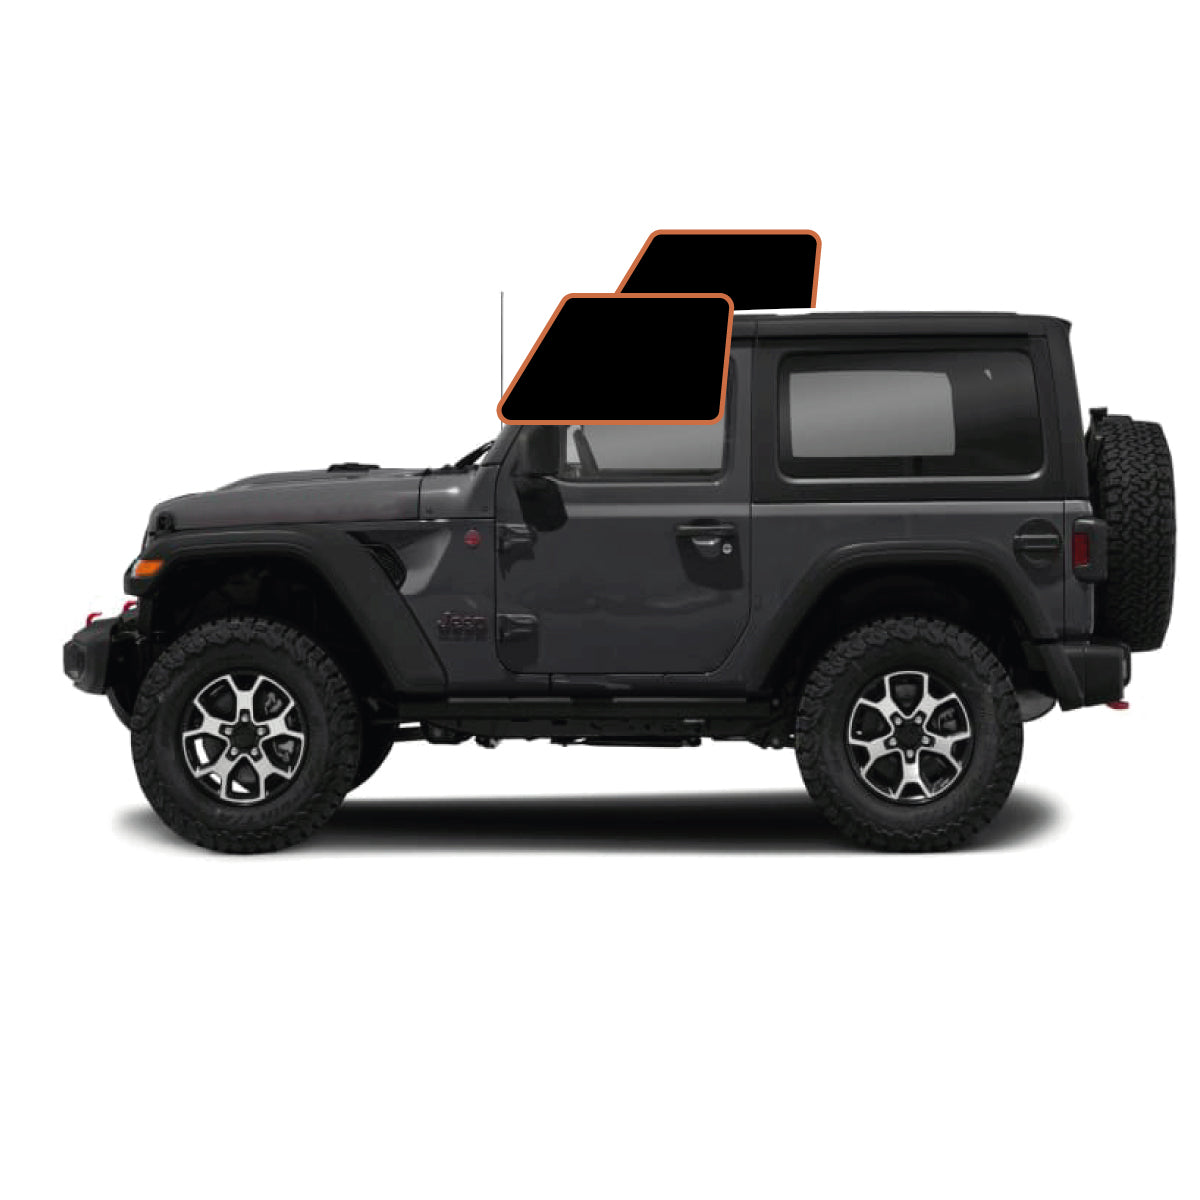 MotoShield Pro Premium Professional 2mil Precut Ceramic Window Tint Film for 2011-2017 Jeep Wrangler 2 Door Hard Top — (Front Driver/Passenger 25%) + Lifetime Warranty